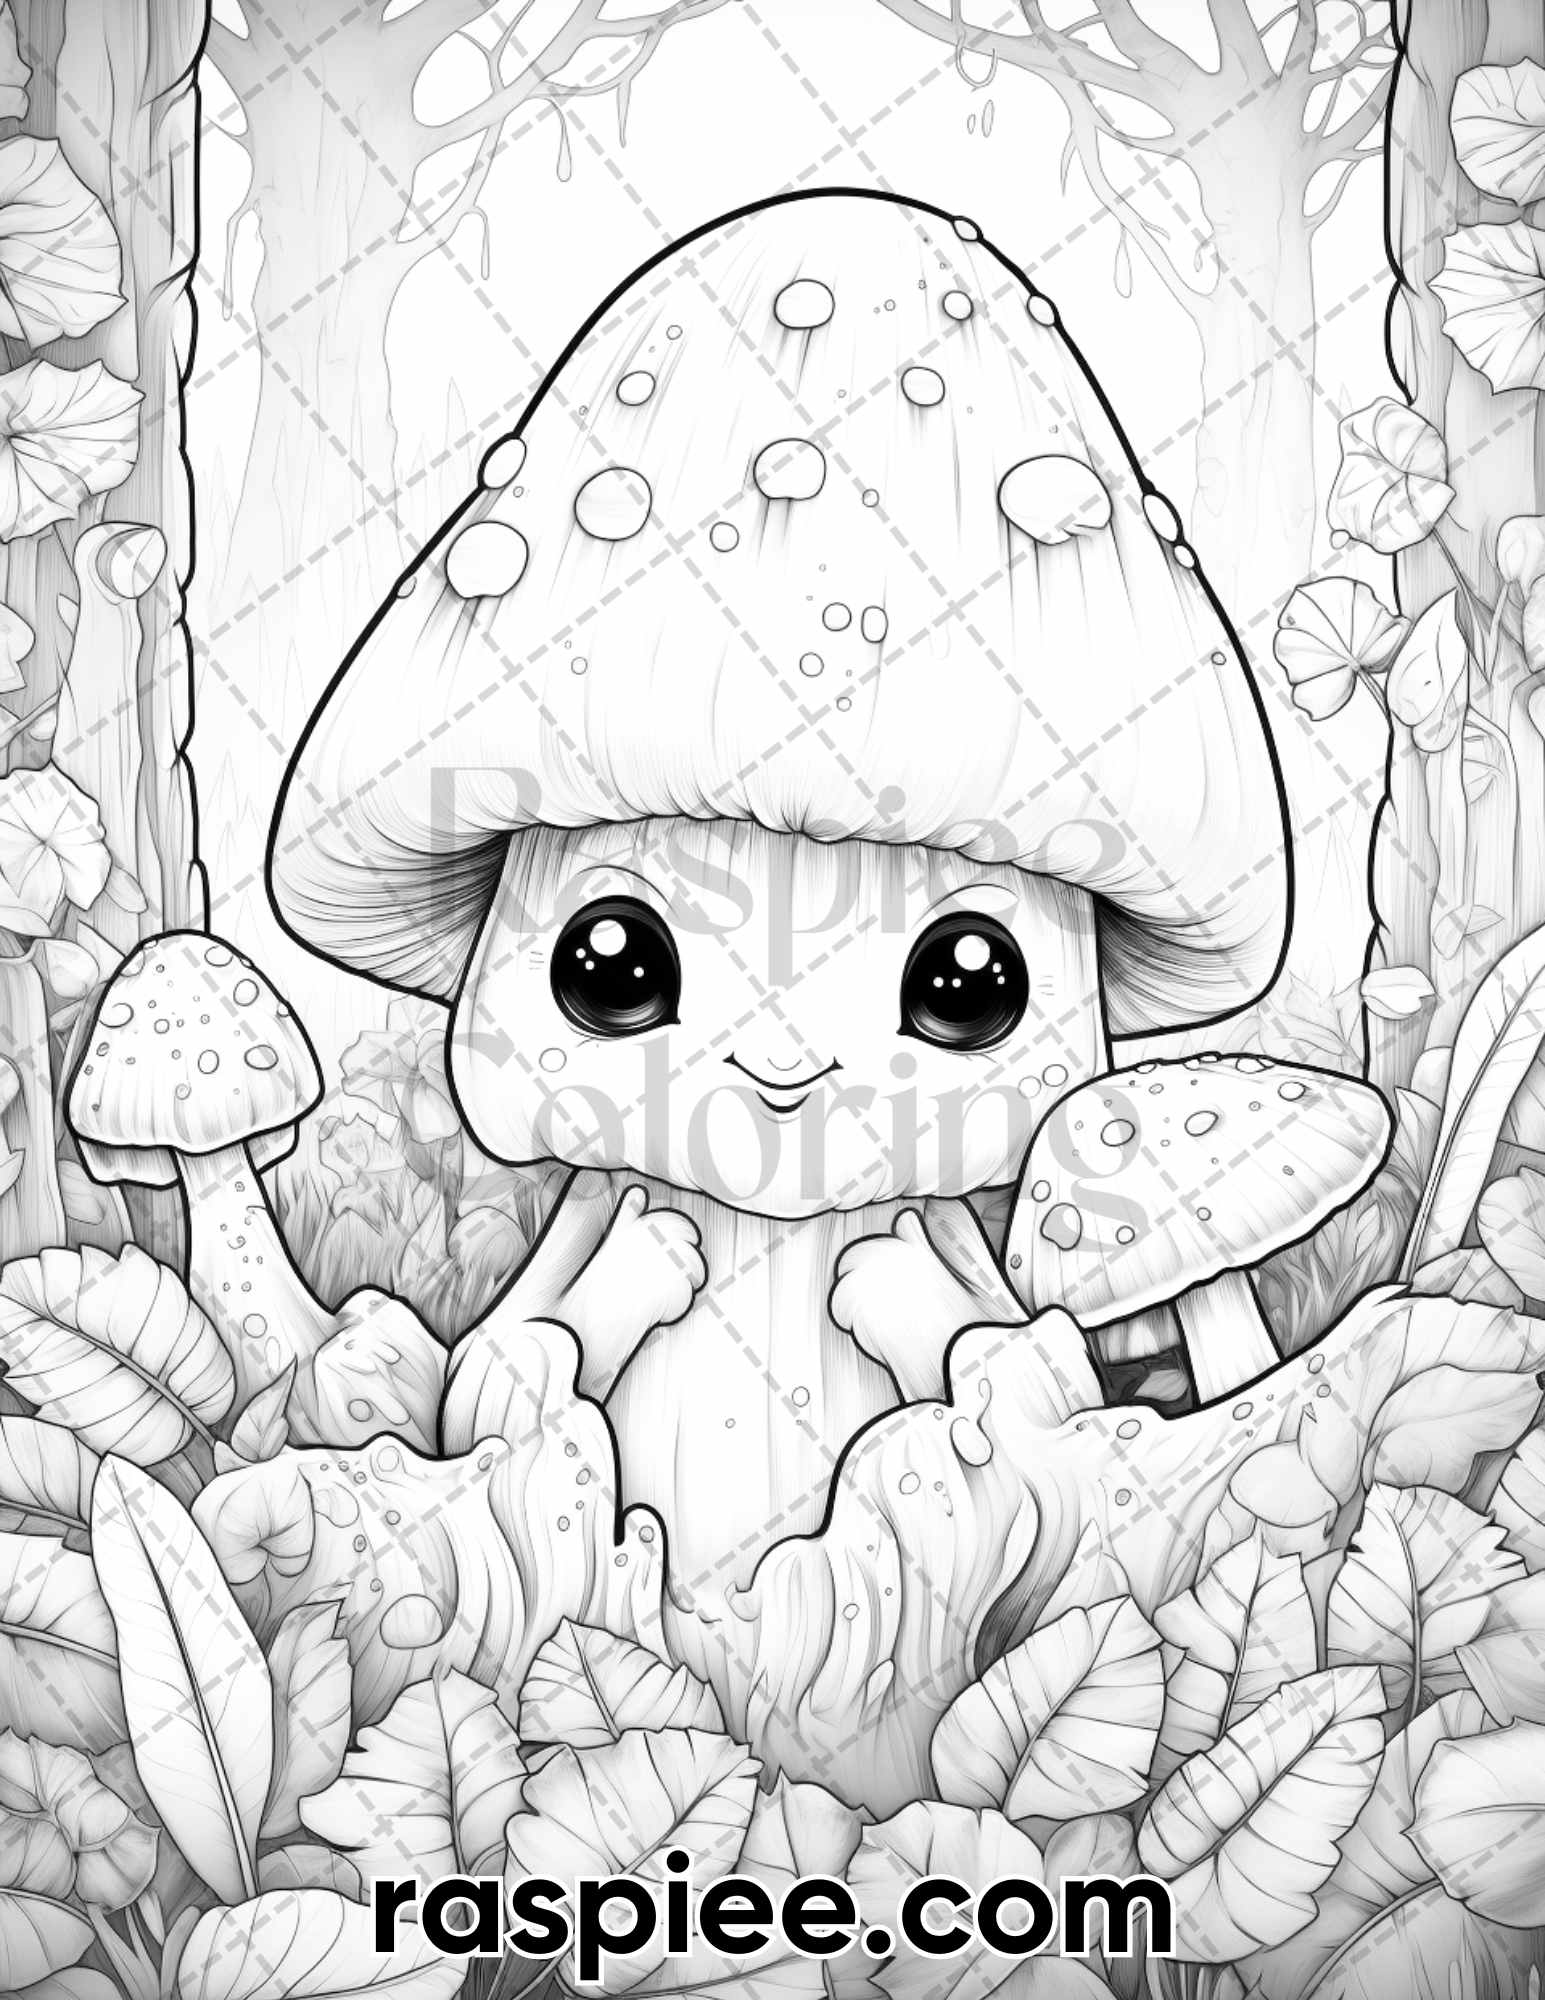 Kawaii Mushroom Coloring Pages, Grayscale Coloring for Adults, Cute Mushroom Coloring Pages, Stress-Relief Coloring, Kawaii Coloring Pages for Adults, Kawaii Coloring Book Printable, Kawaii Coloring Sheets